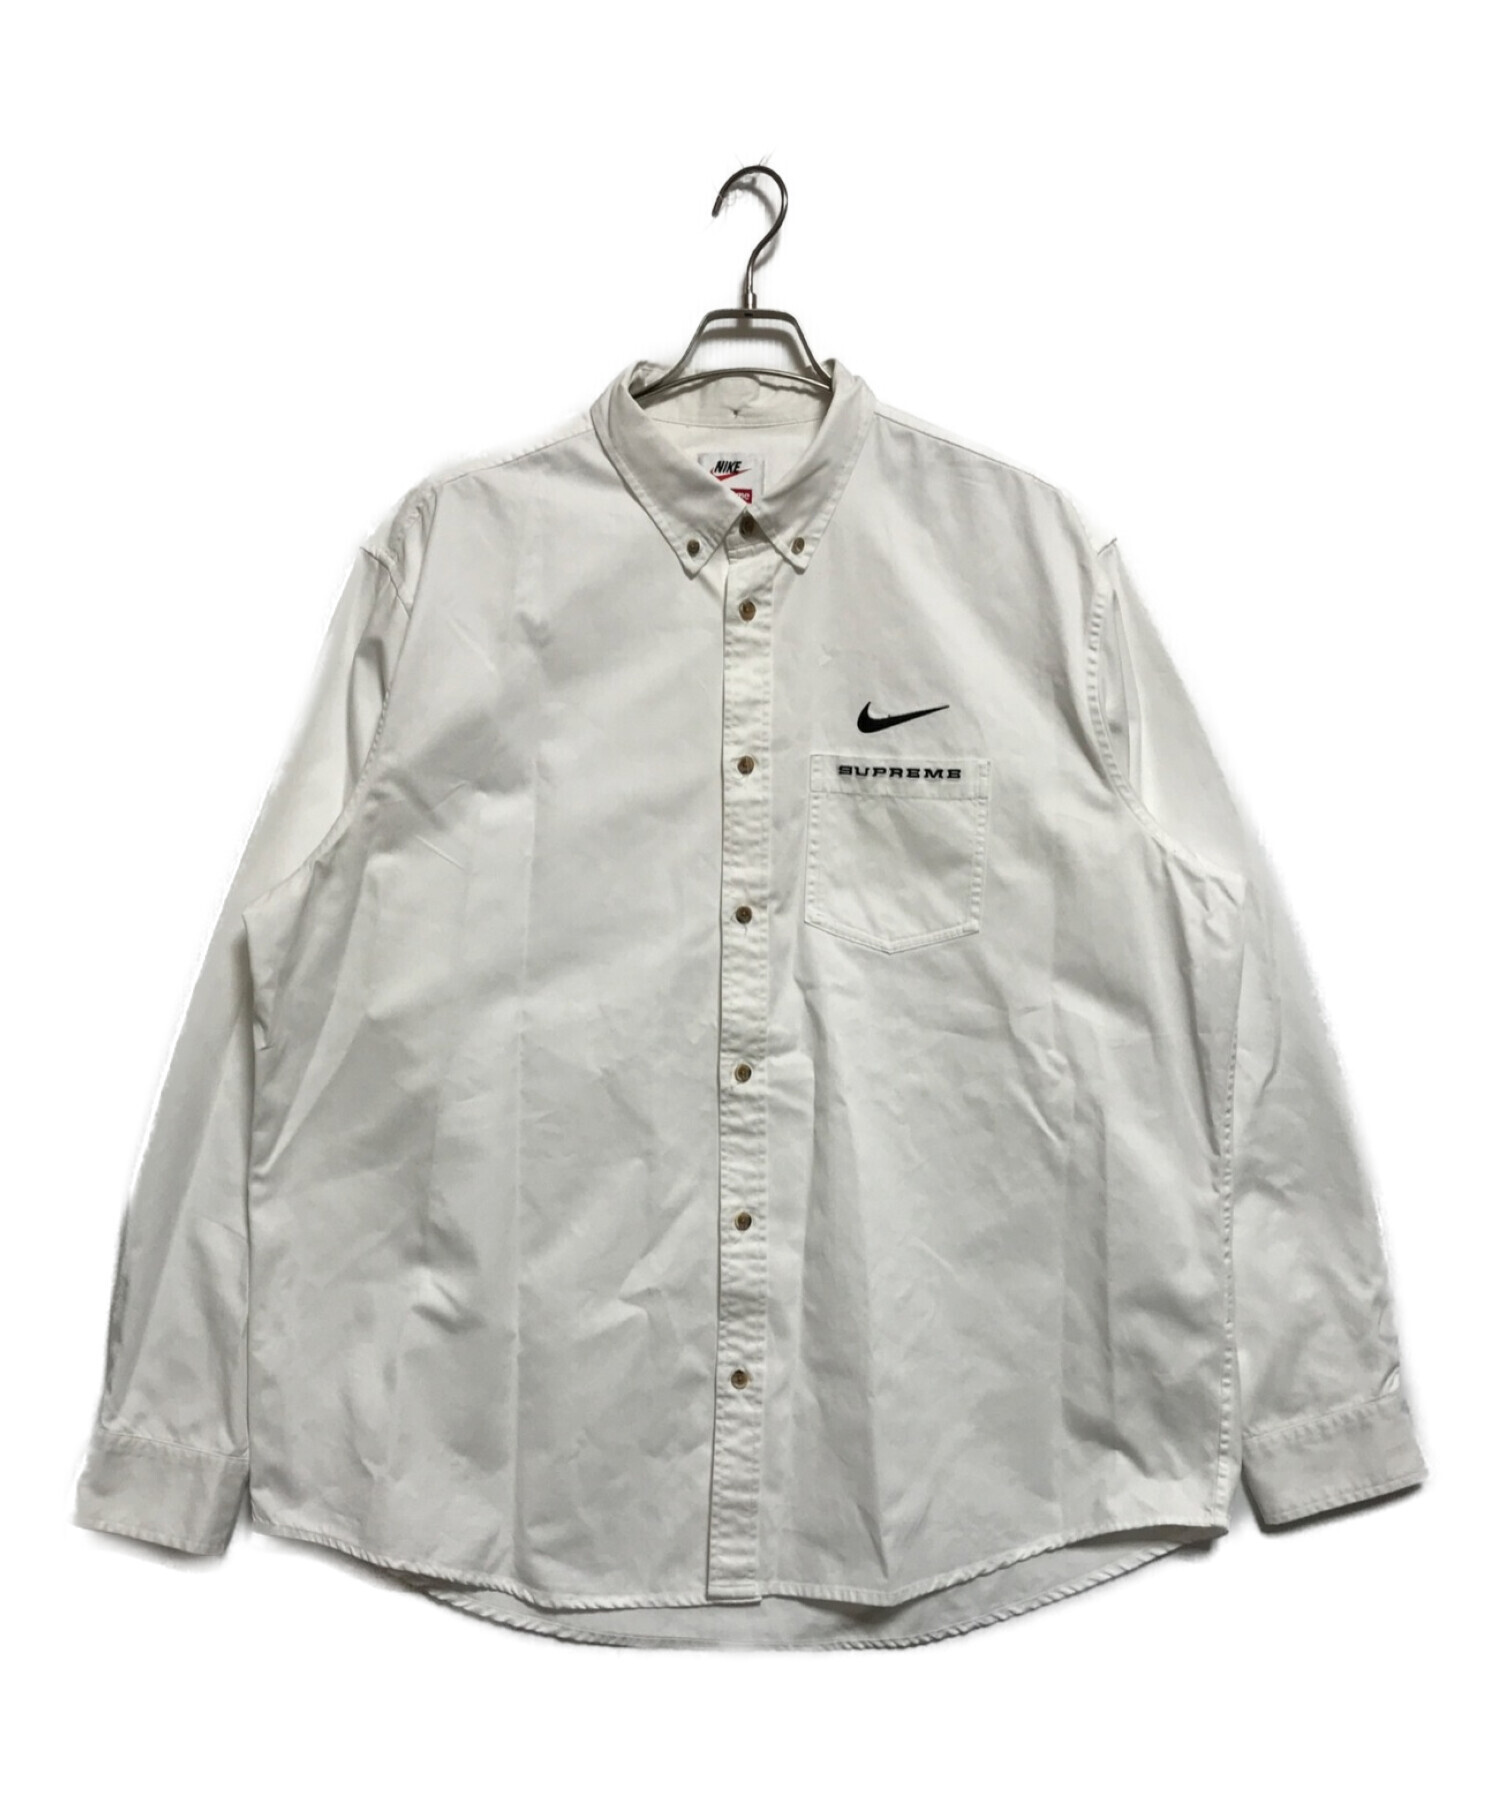 Supreme / Nike® Cotton Twill Shirt White